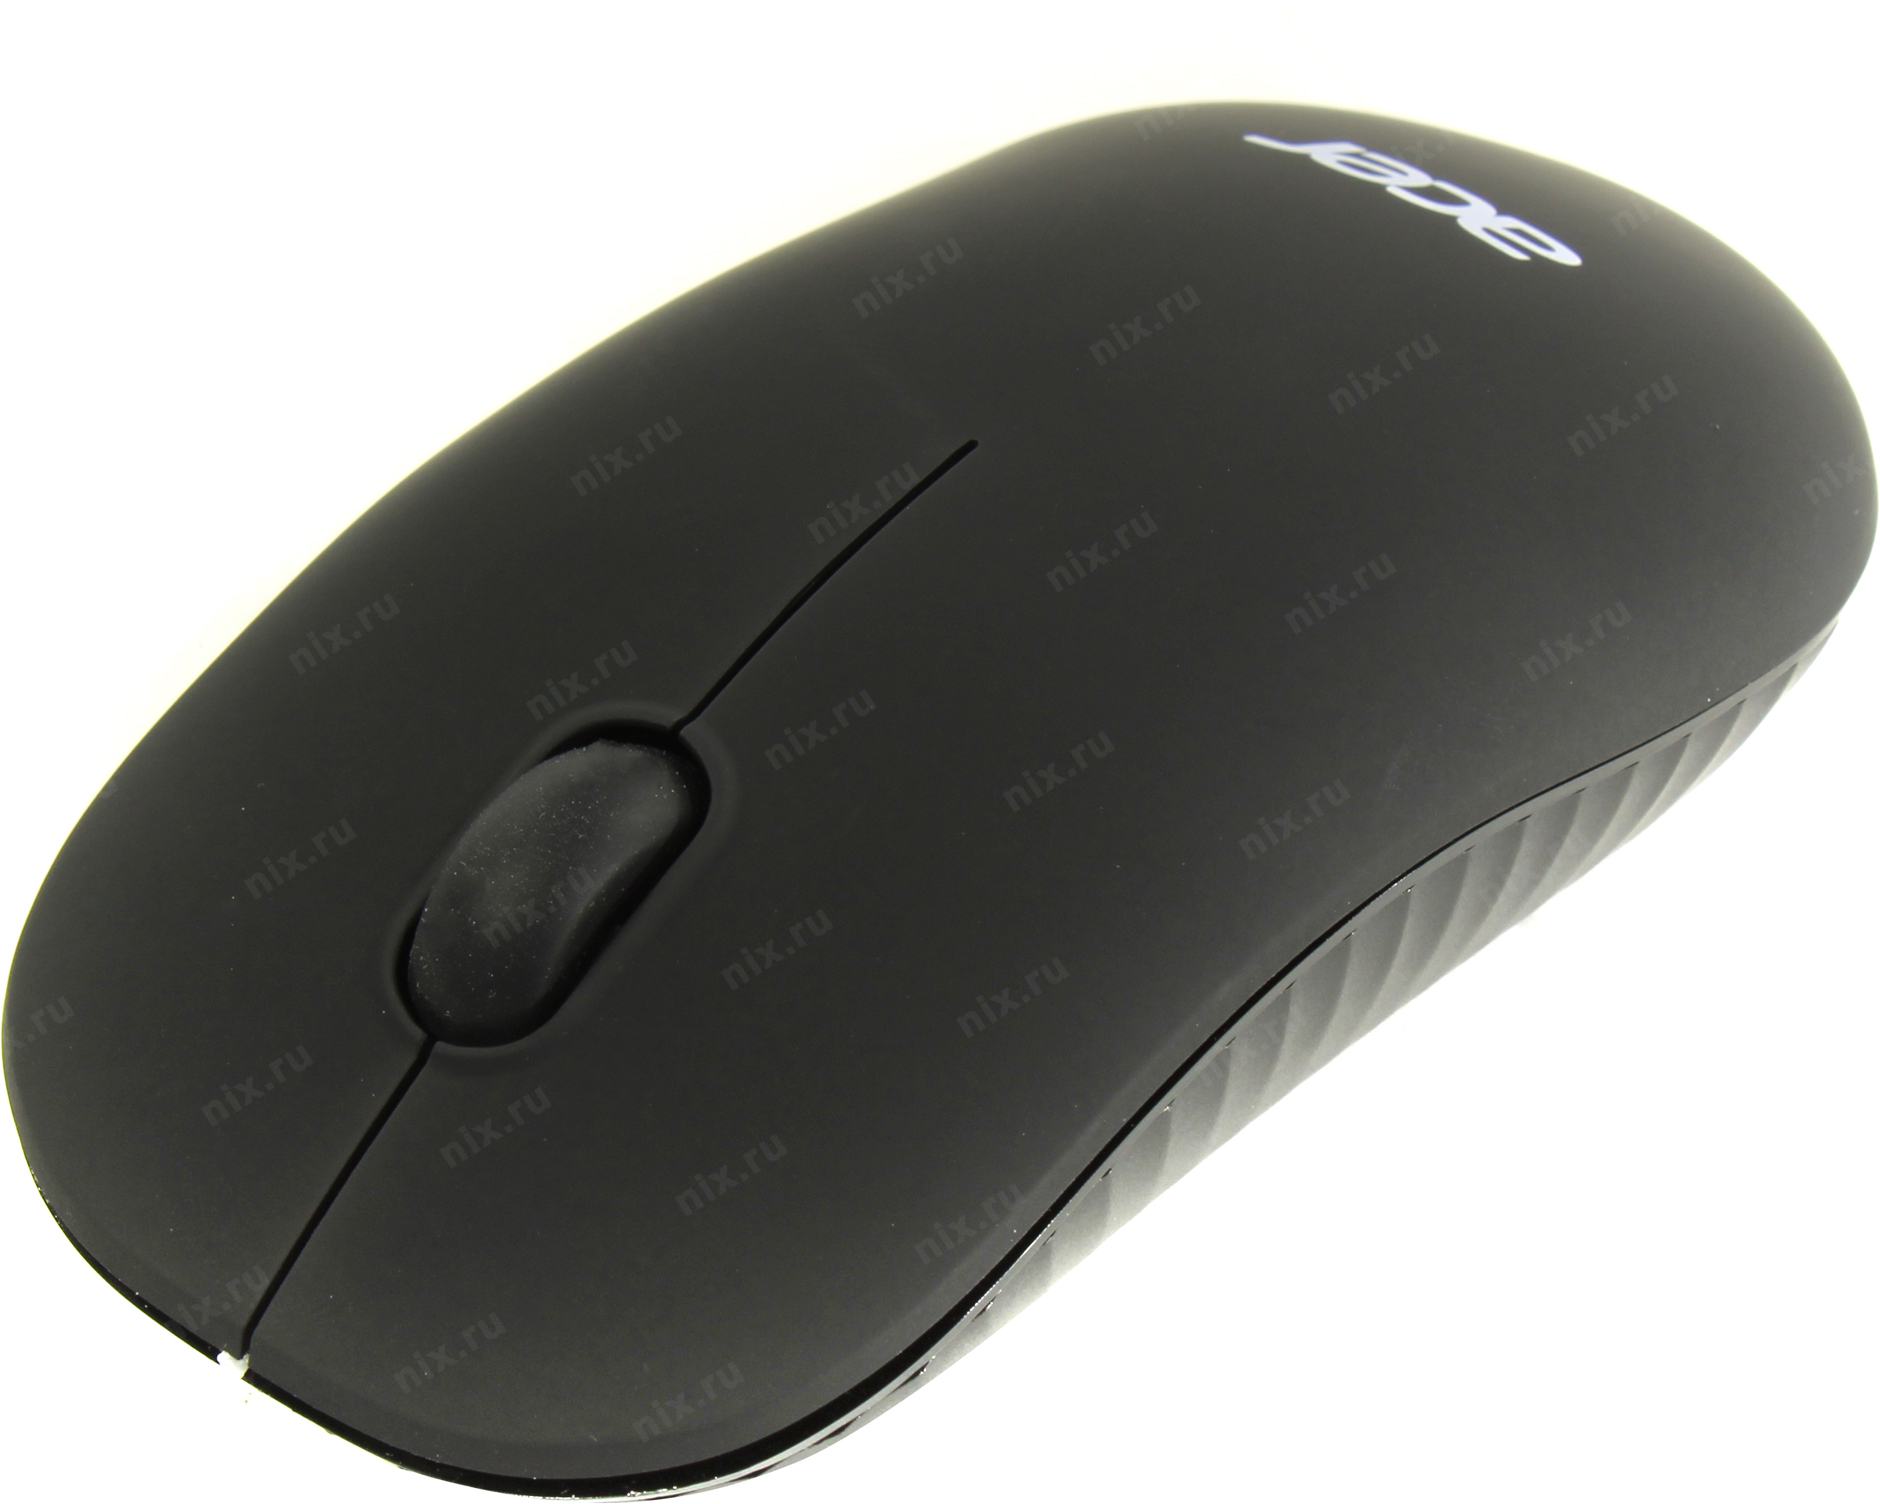 Acer okr010. Acer okr030. Клавиатура и мышь Acer.